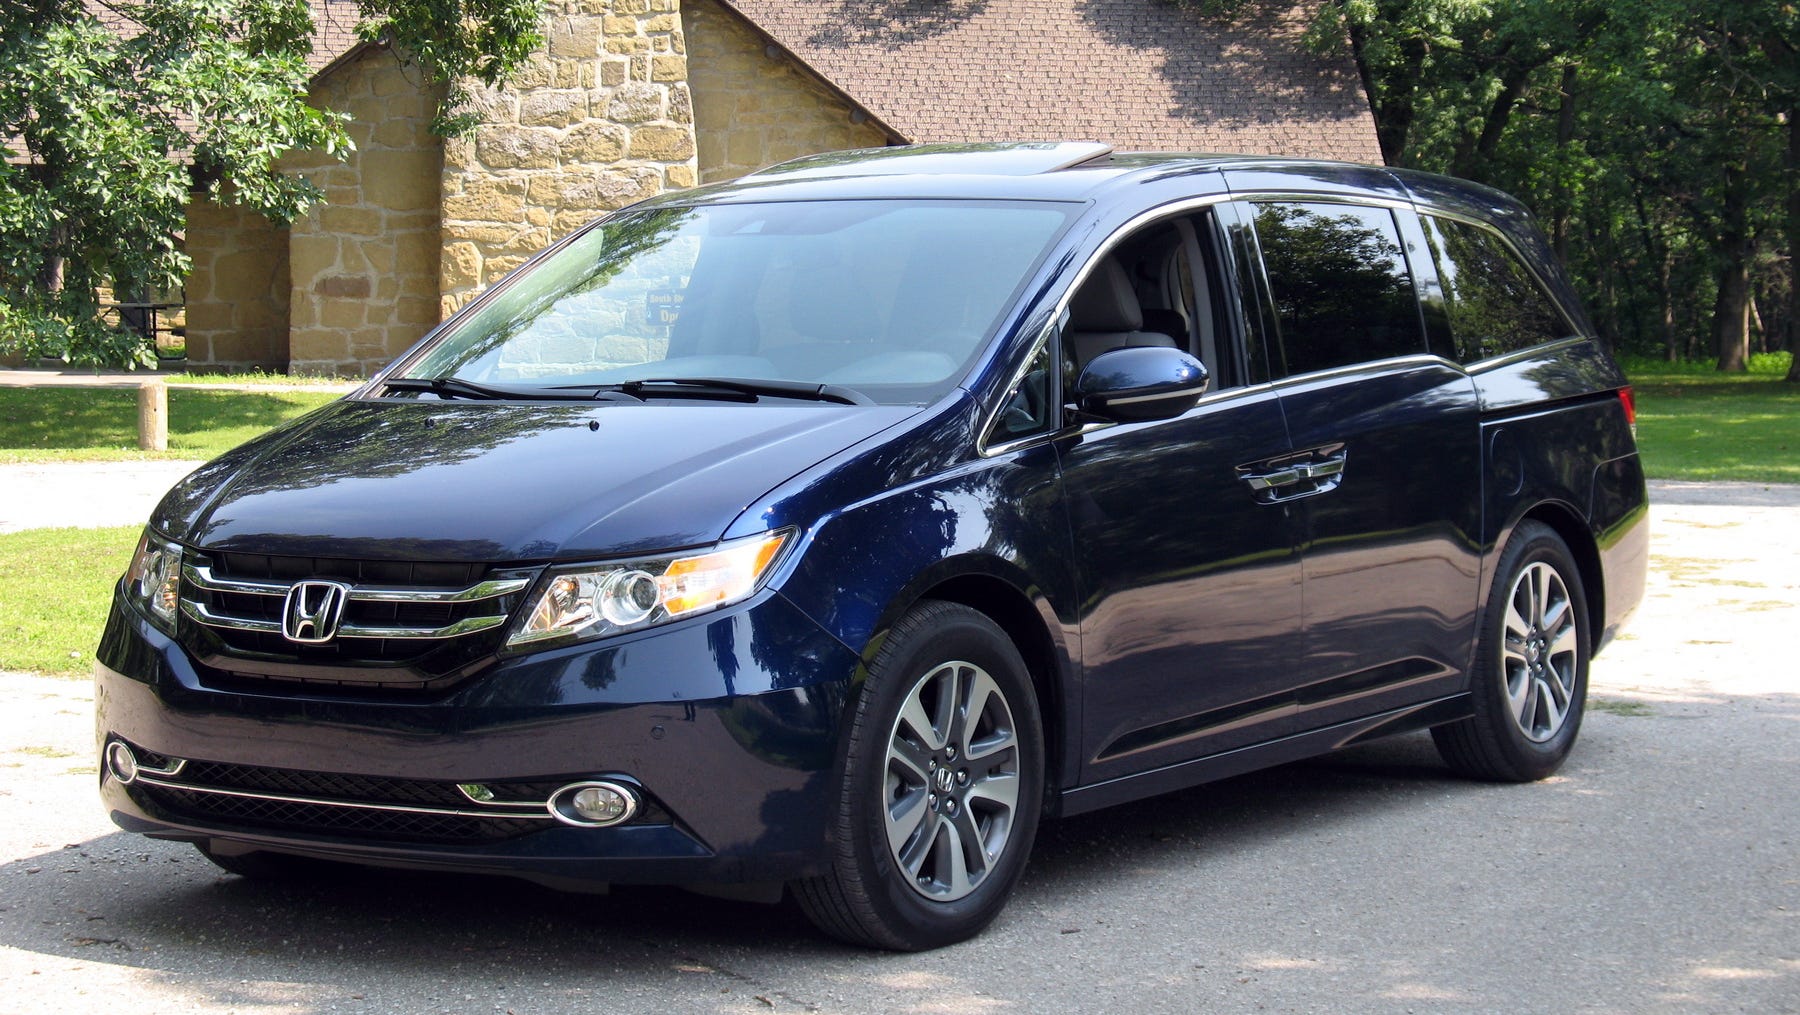 More value, enhanced safety for 2014 Honda Odyssey